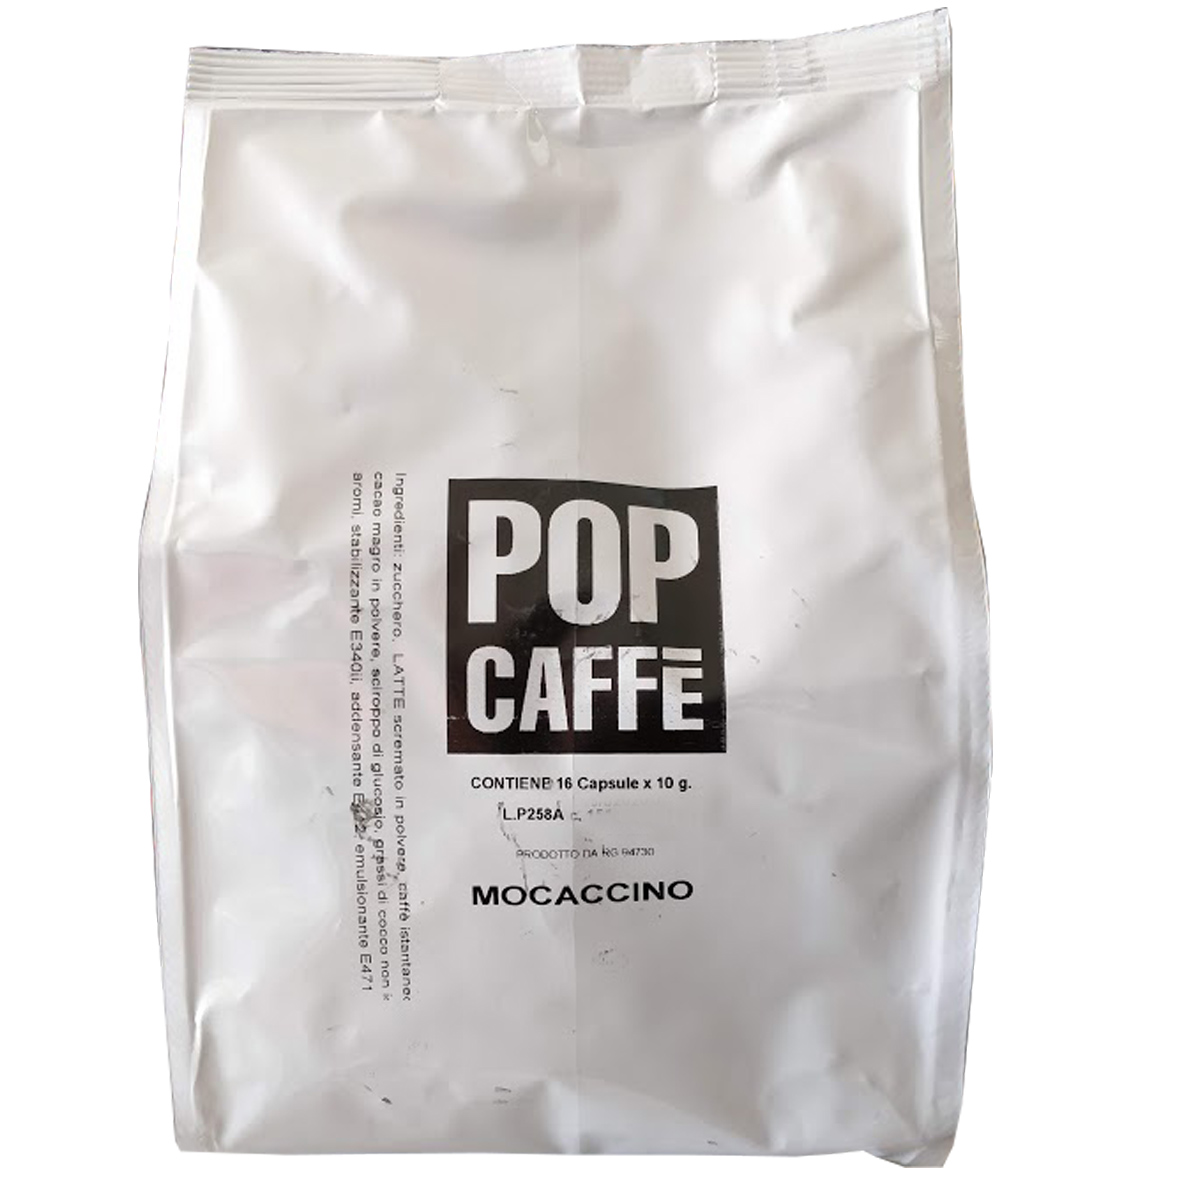 Pop Caffe' e-gusto Mocaccino x16 - Chocolate flavoured coffee